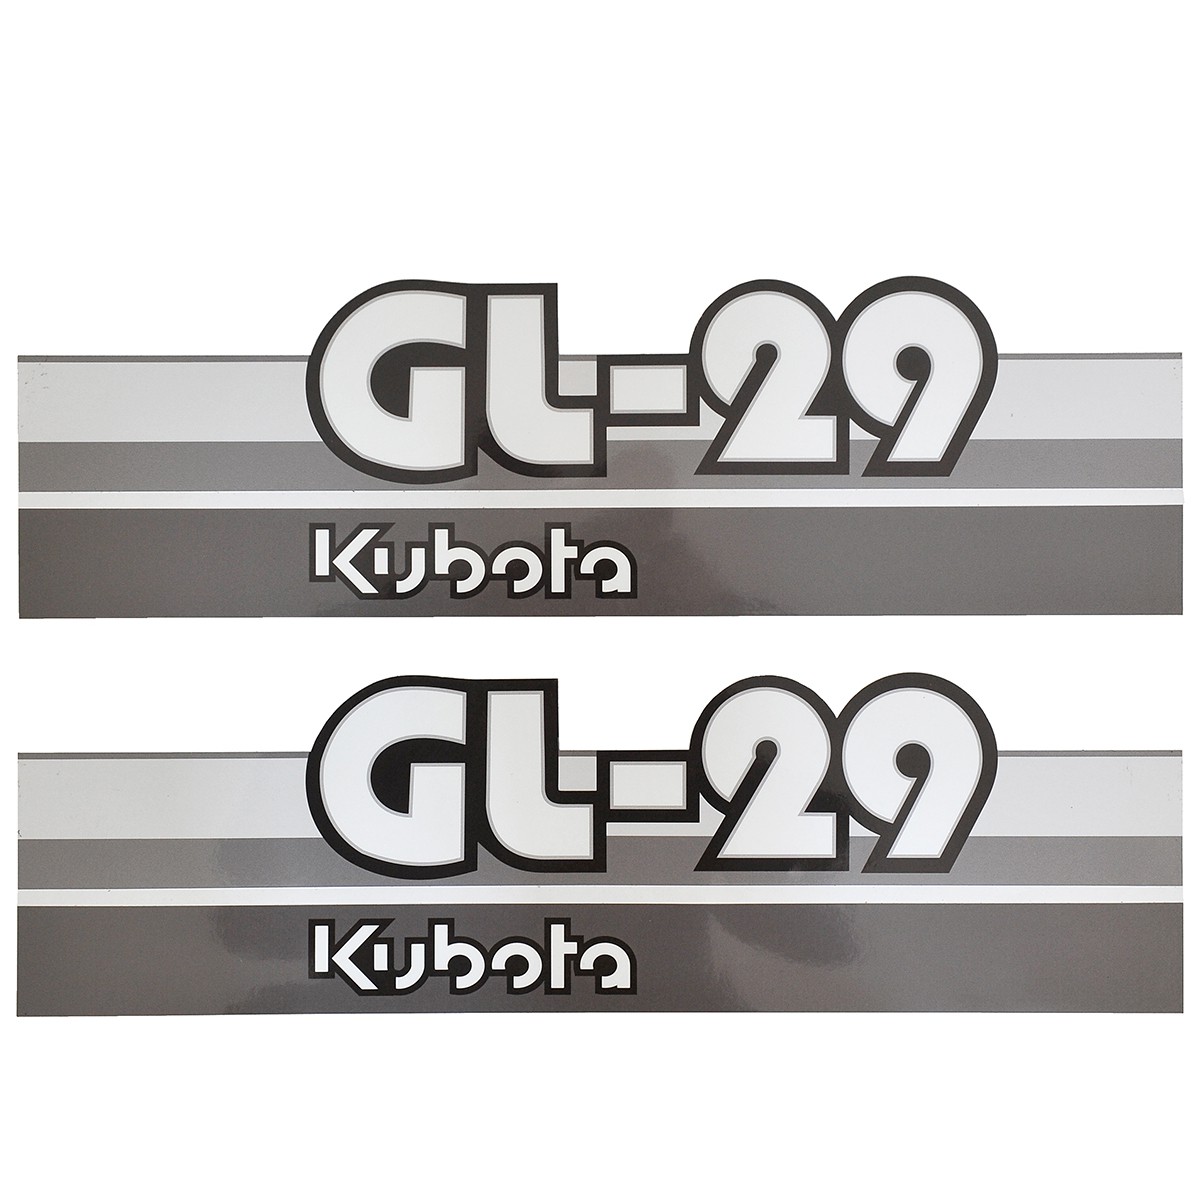 Naklejki Kubota GL29